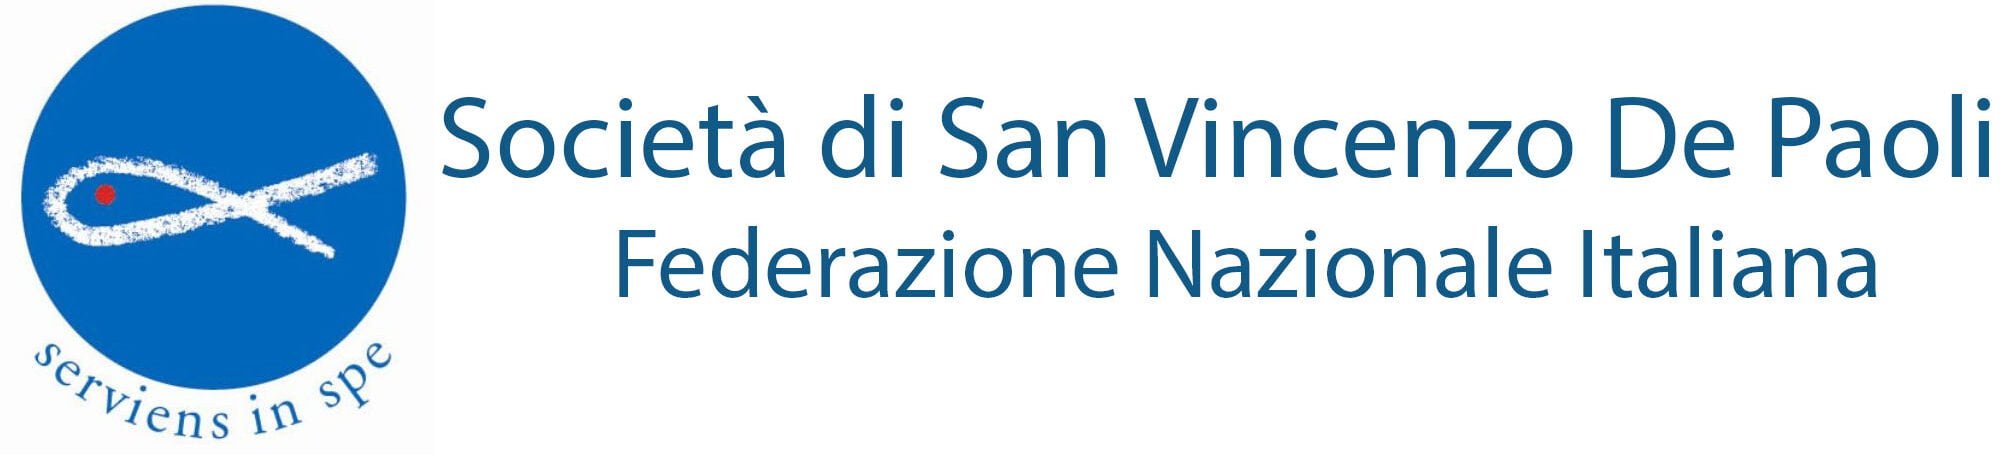 Società di San Vincenzo De Paoli